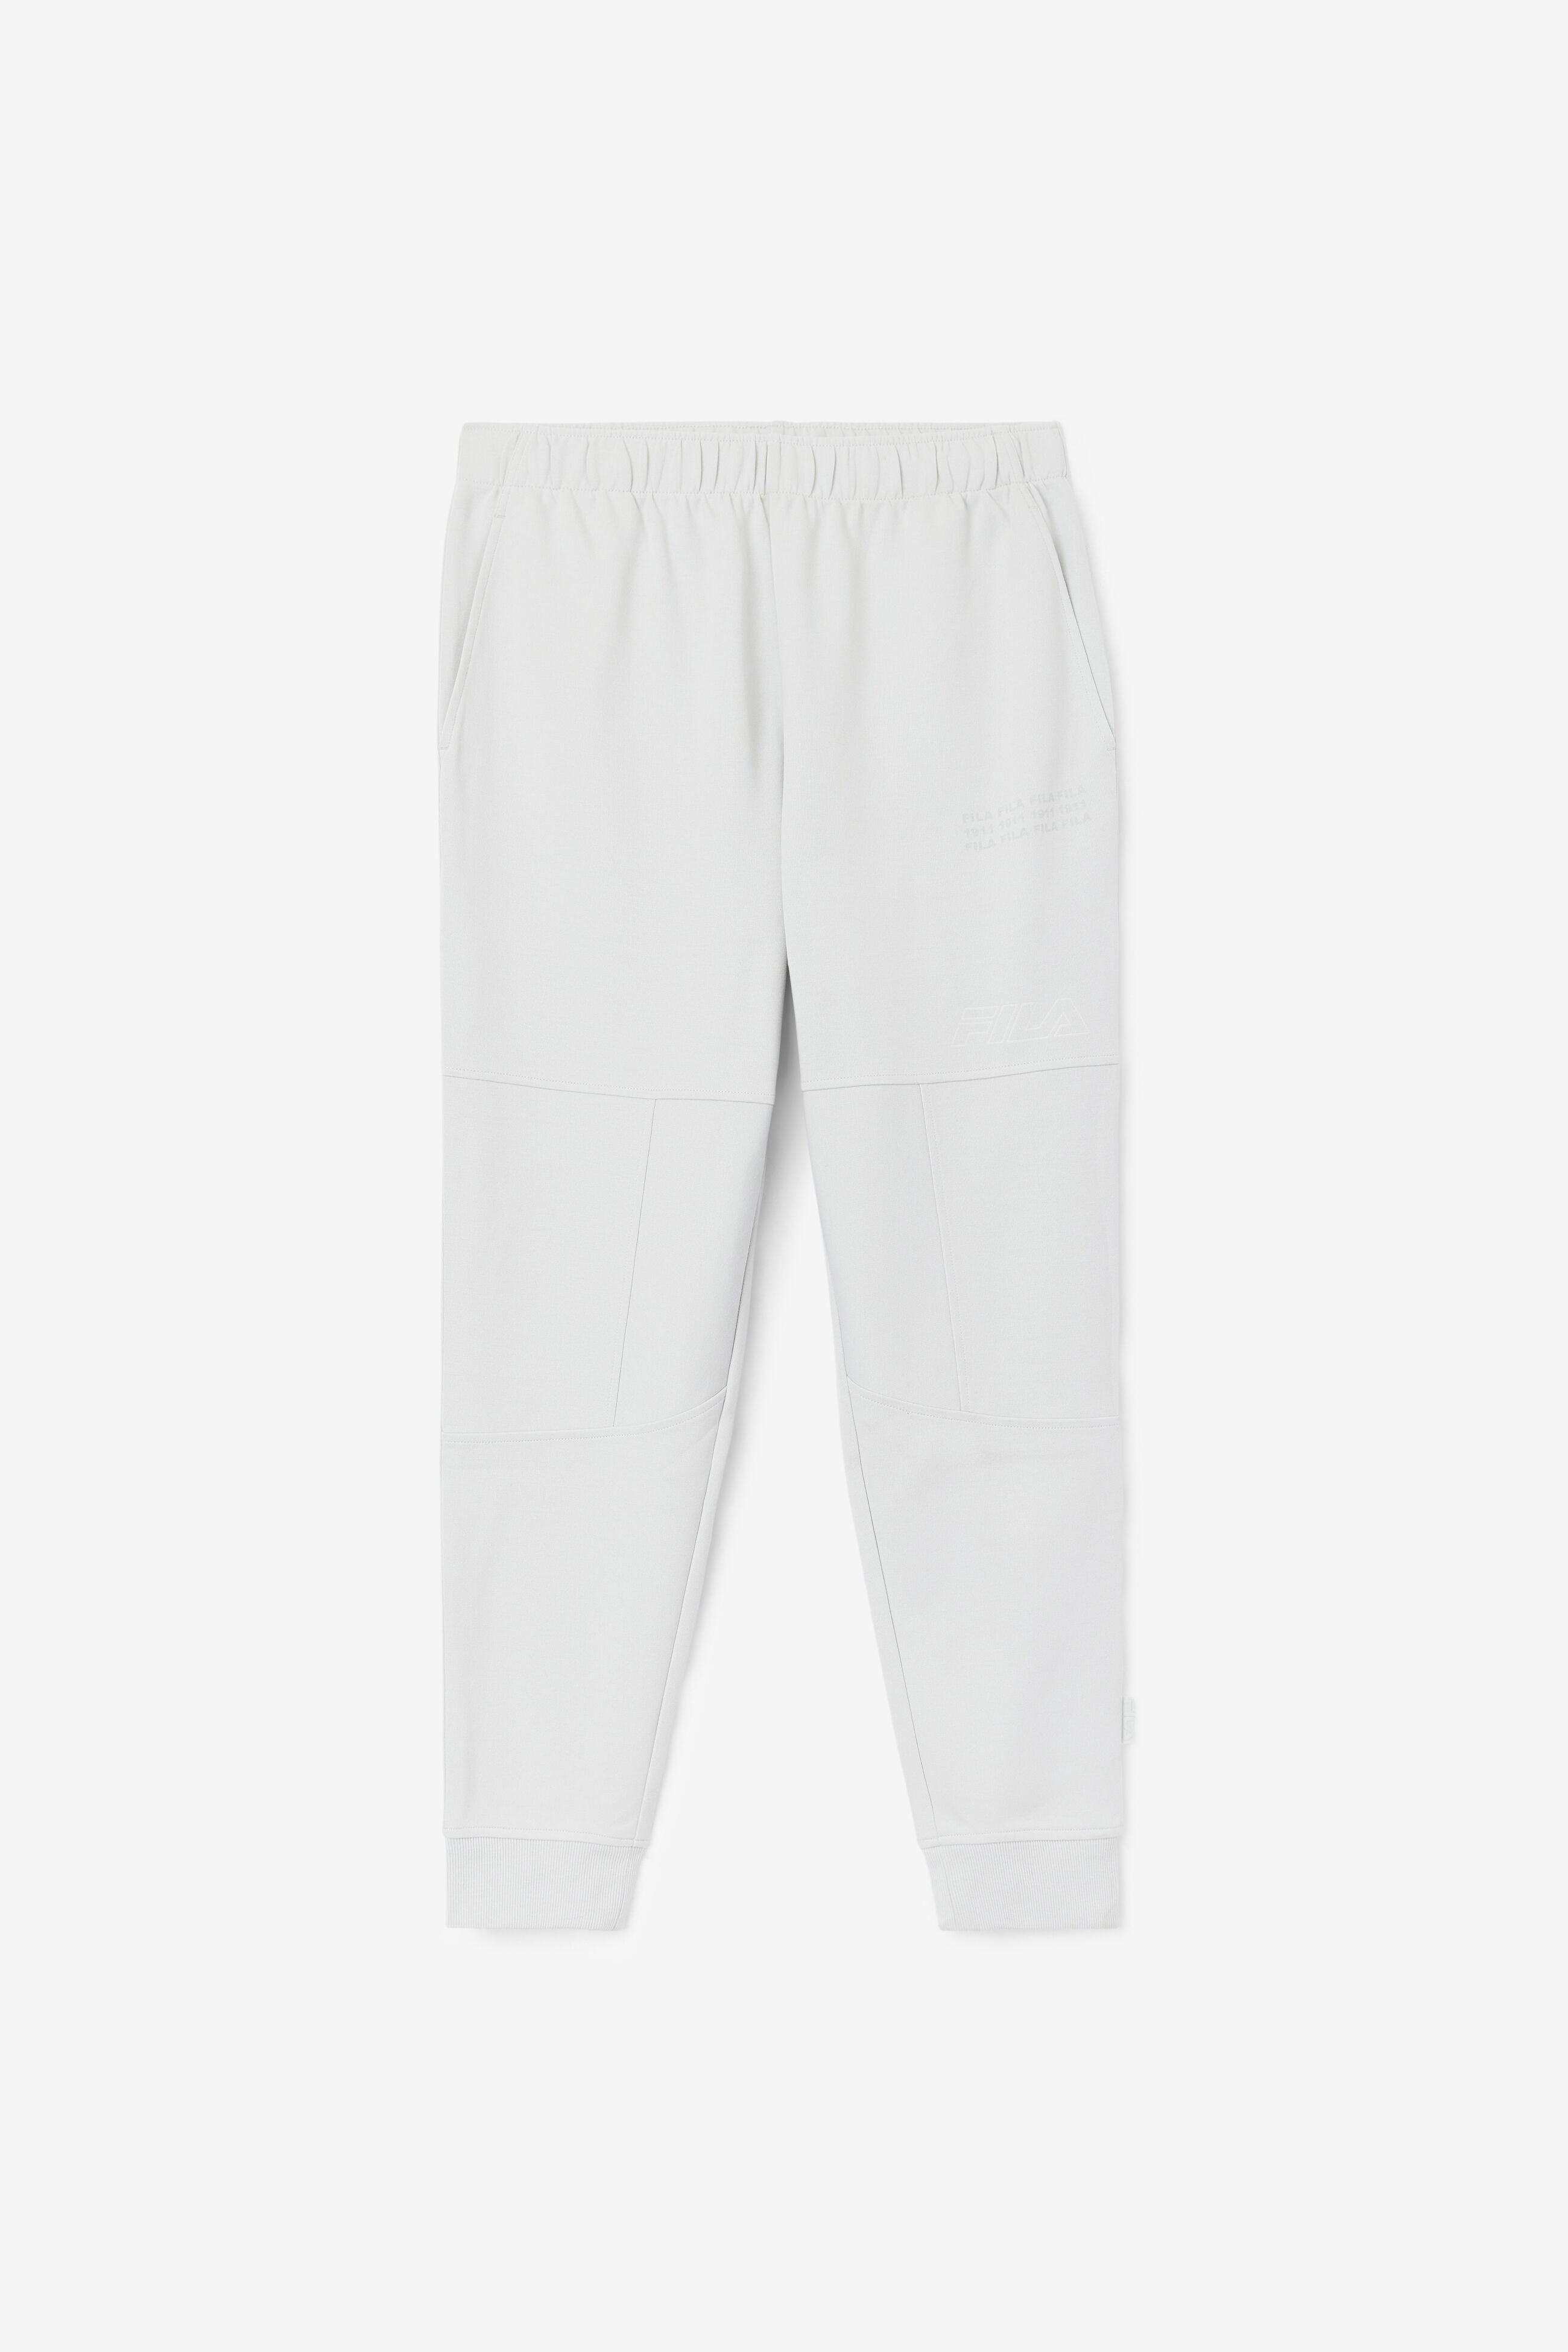 Men's Athletic Pants + Shorts | FILA